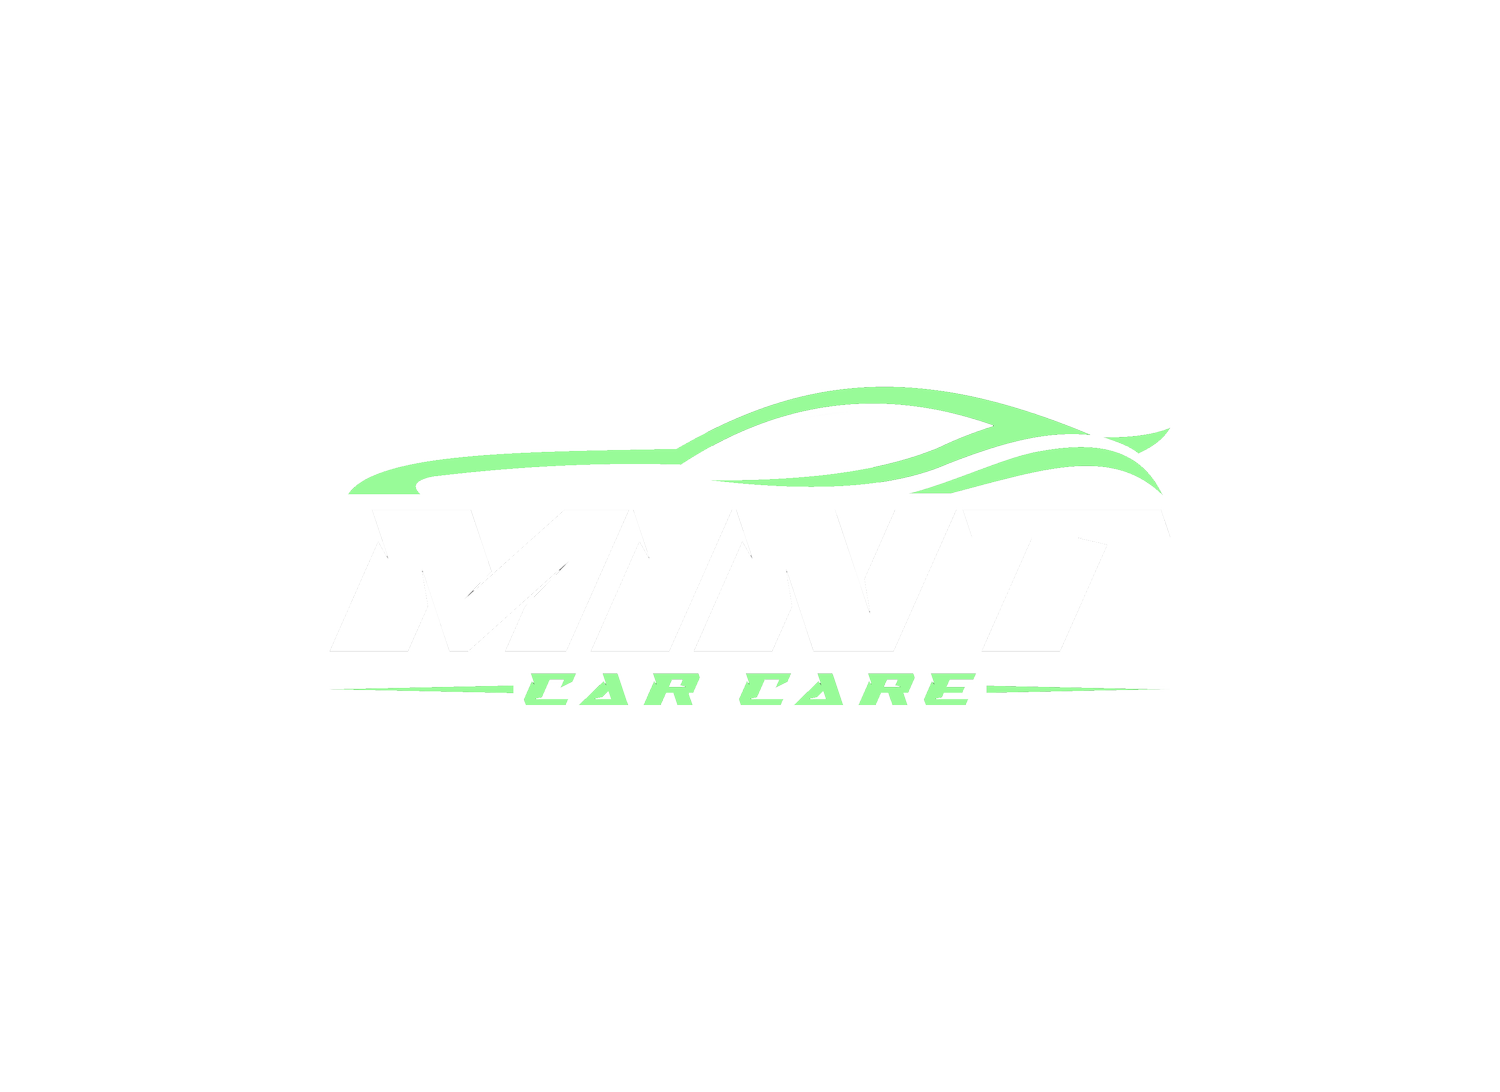 Mint Car Care